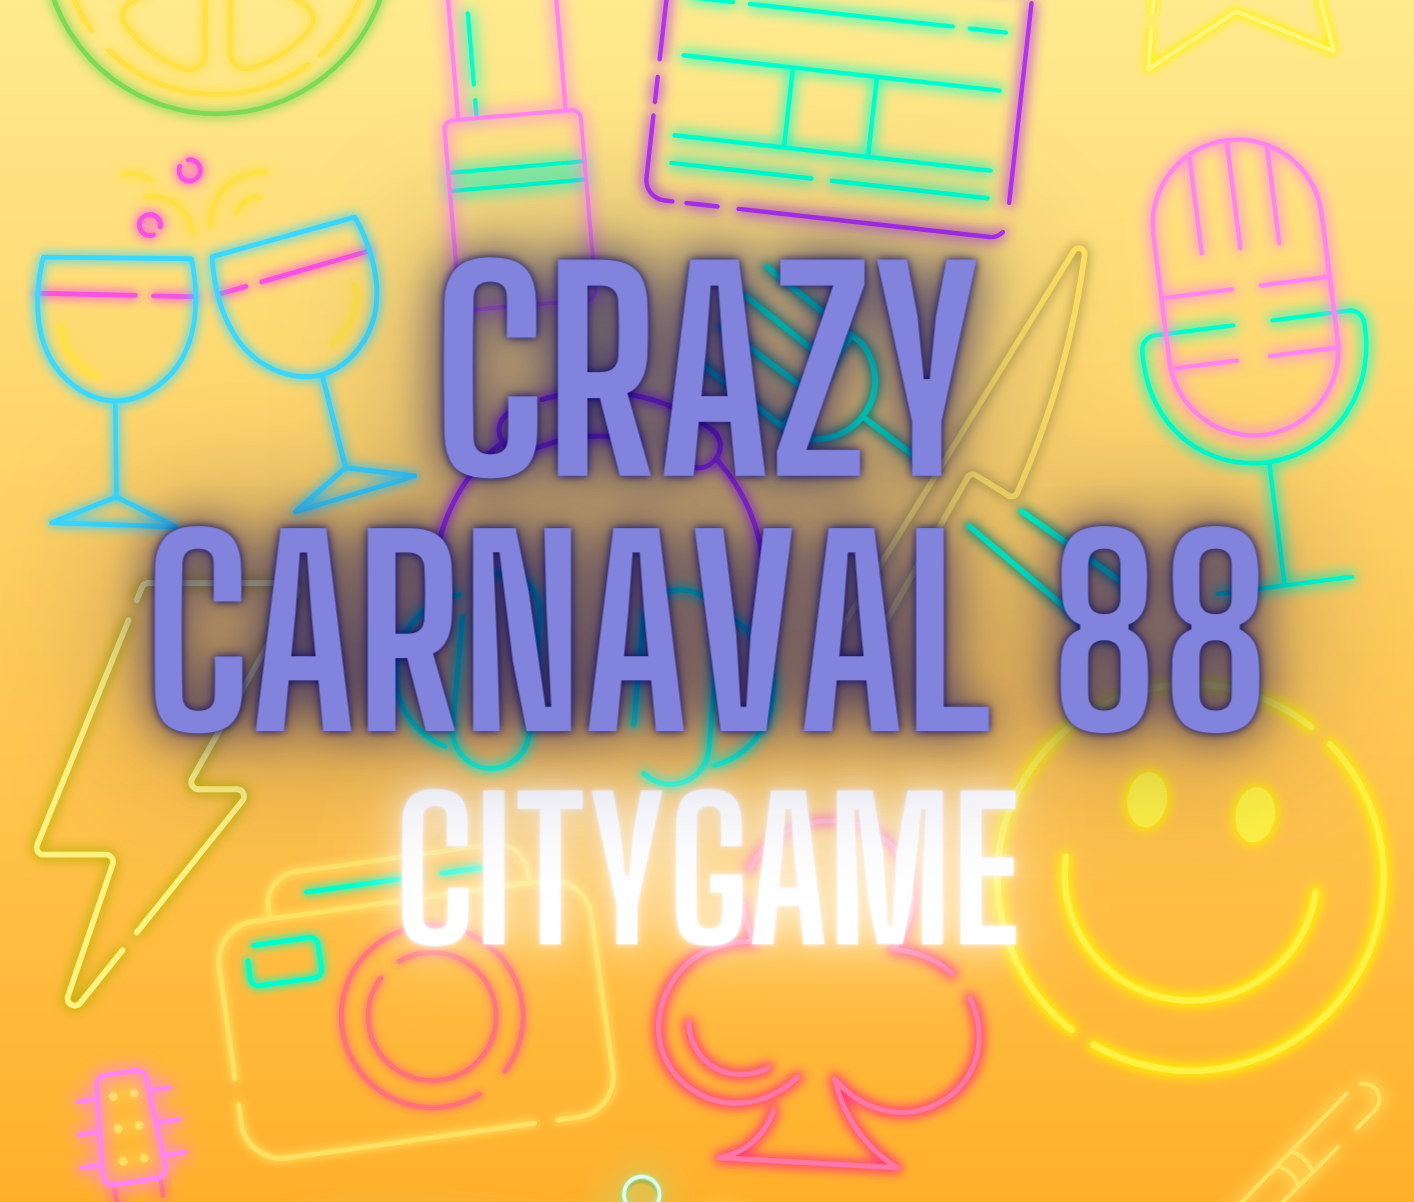 Crazy Carnaval 88